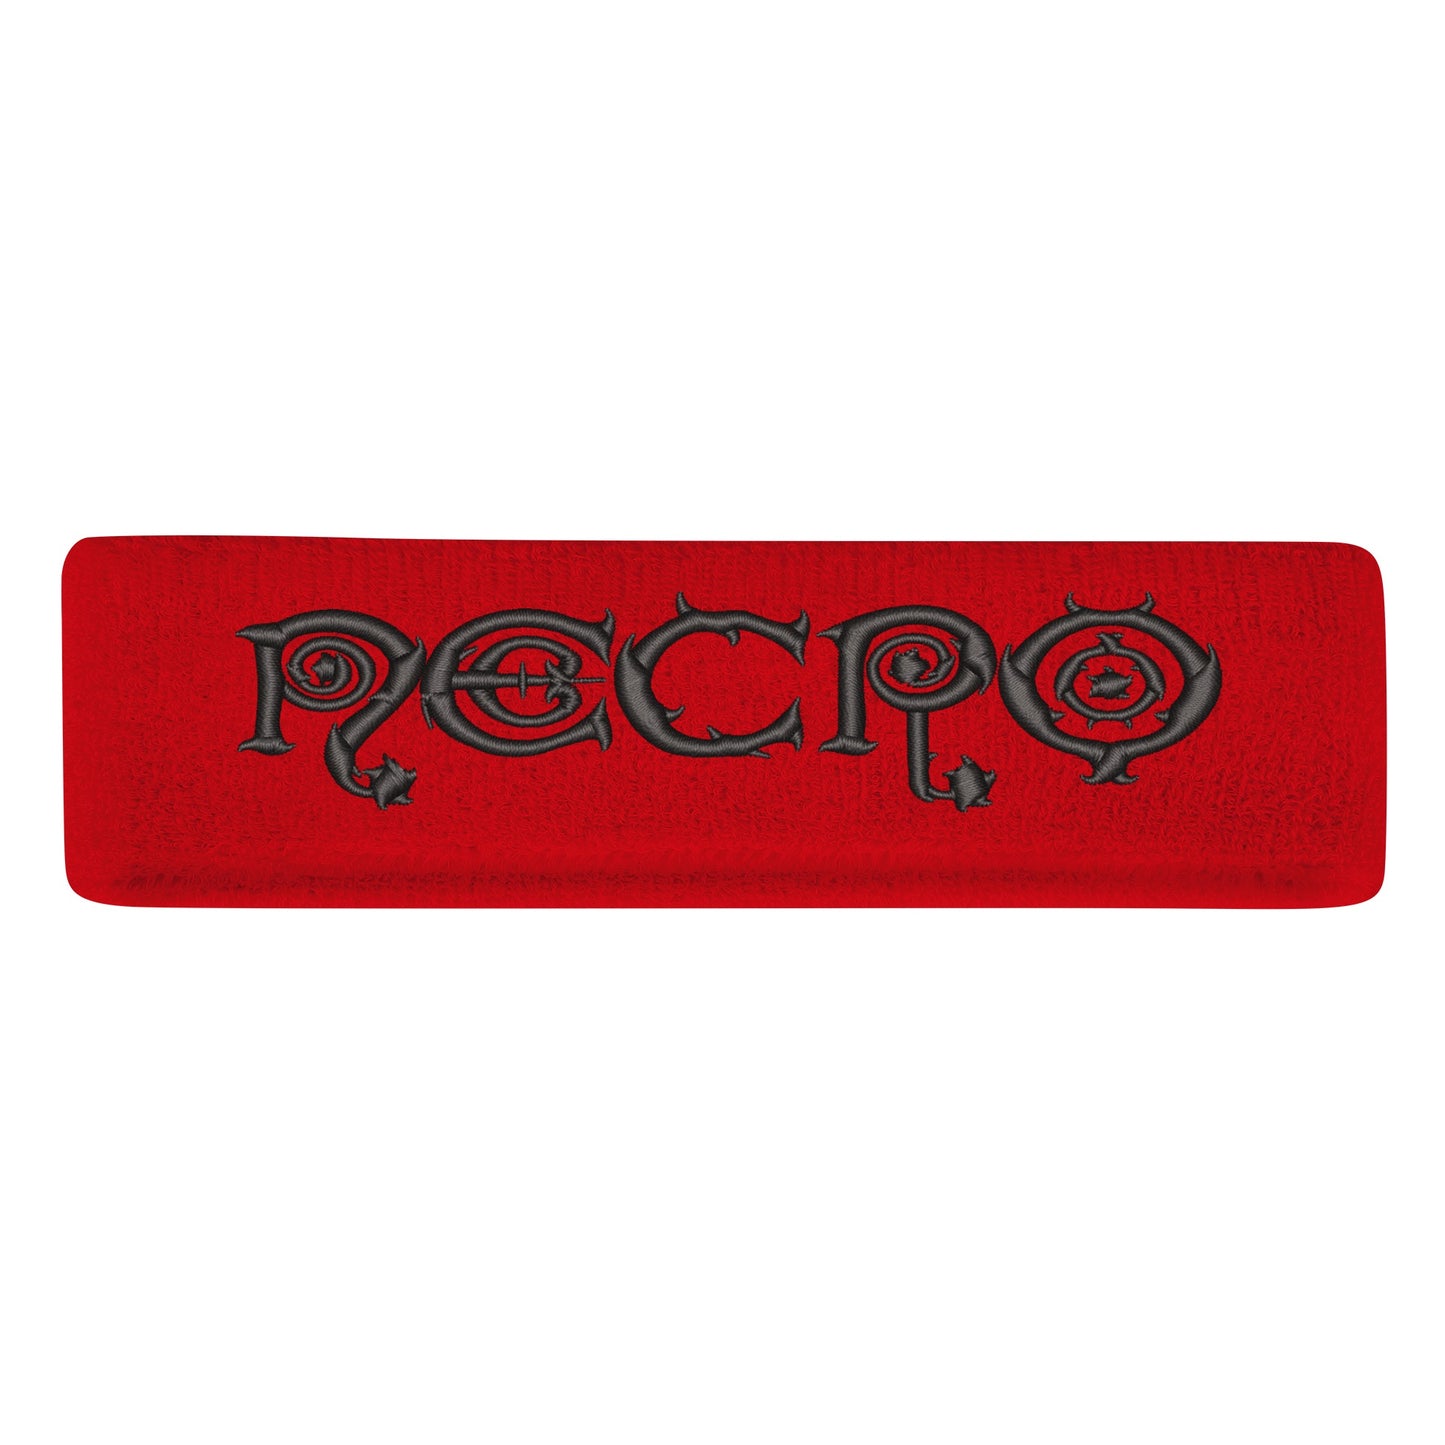 Necro - Logo - Embroidered Sports Headband